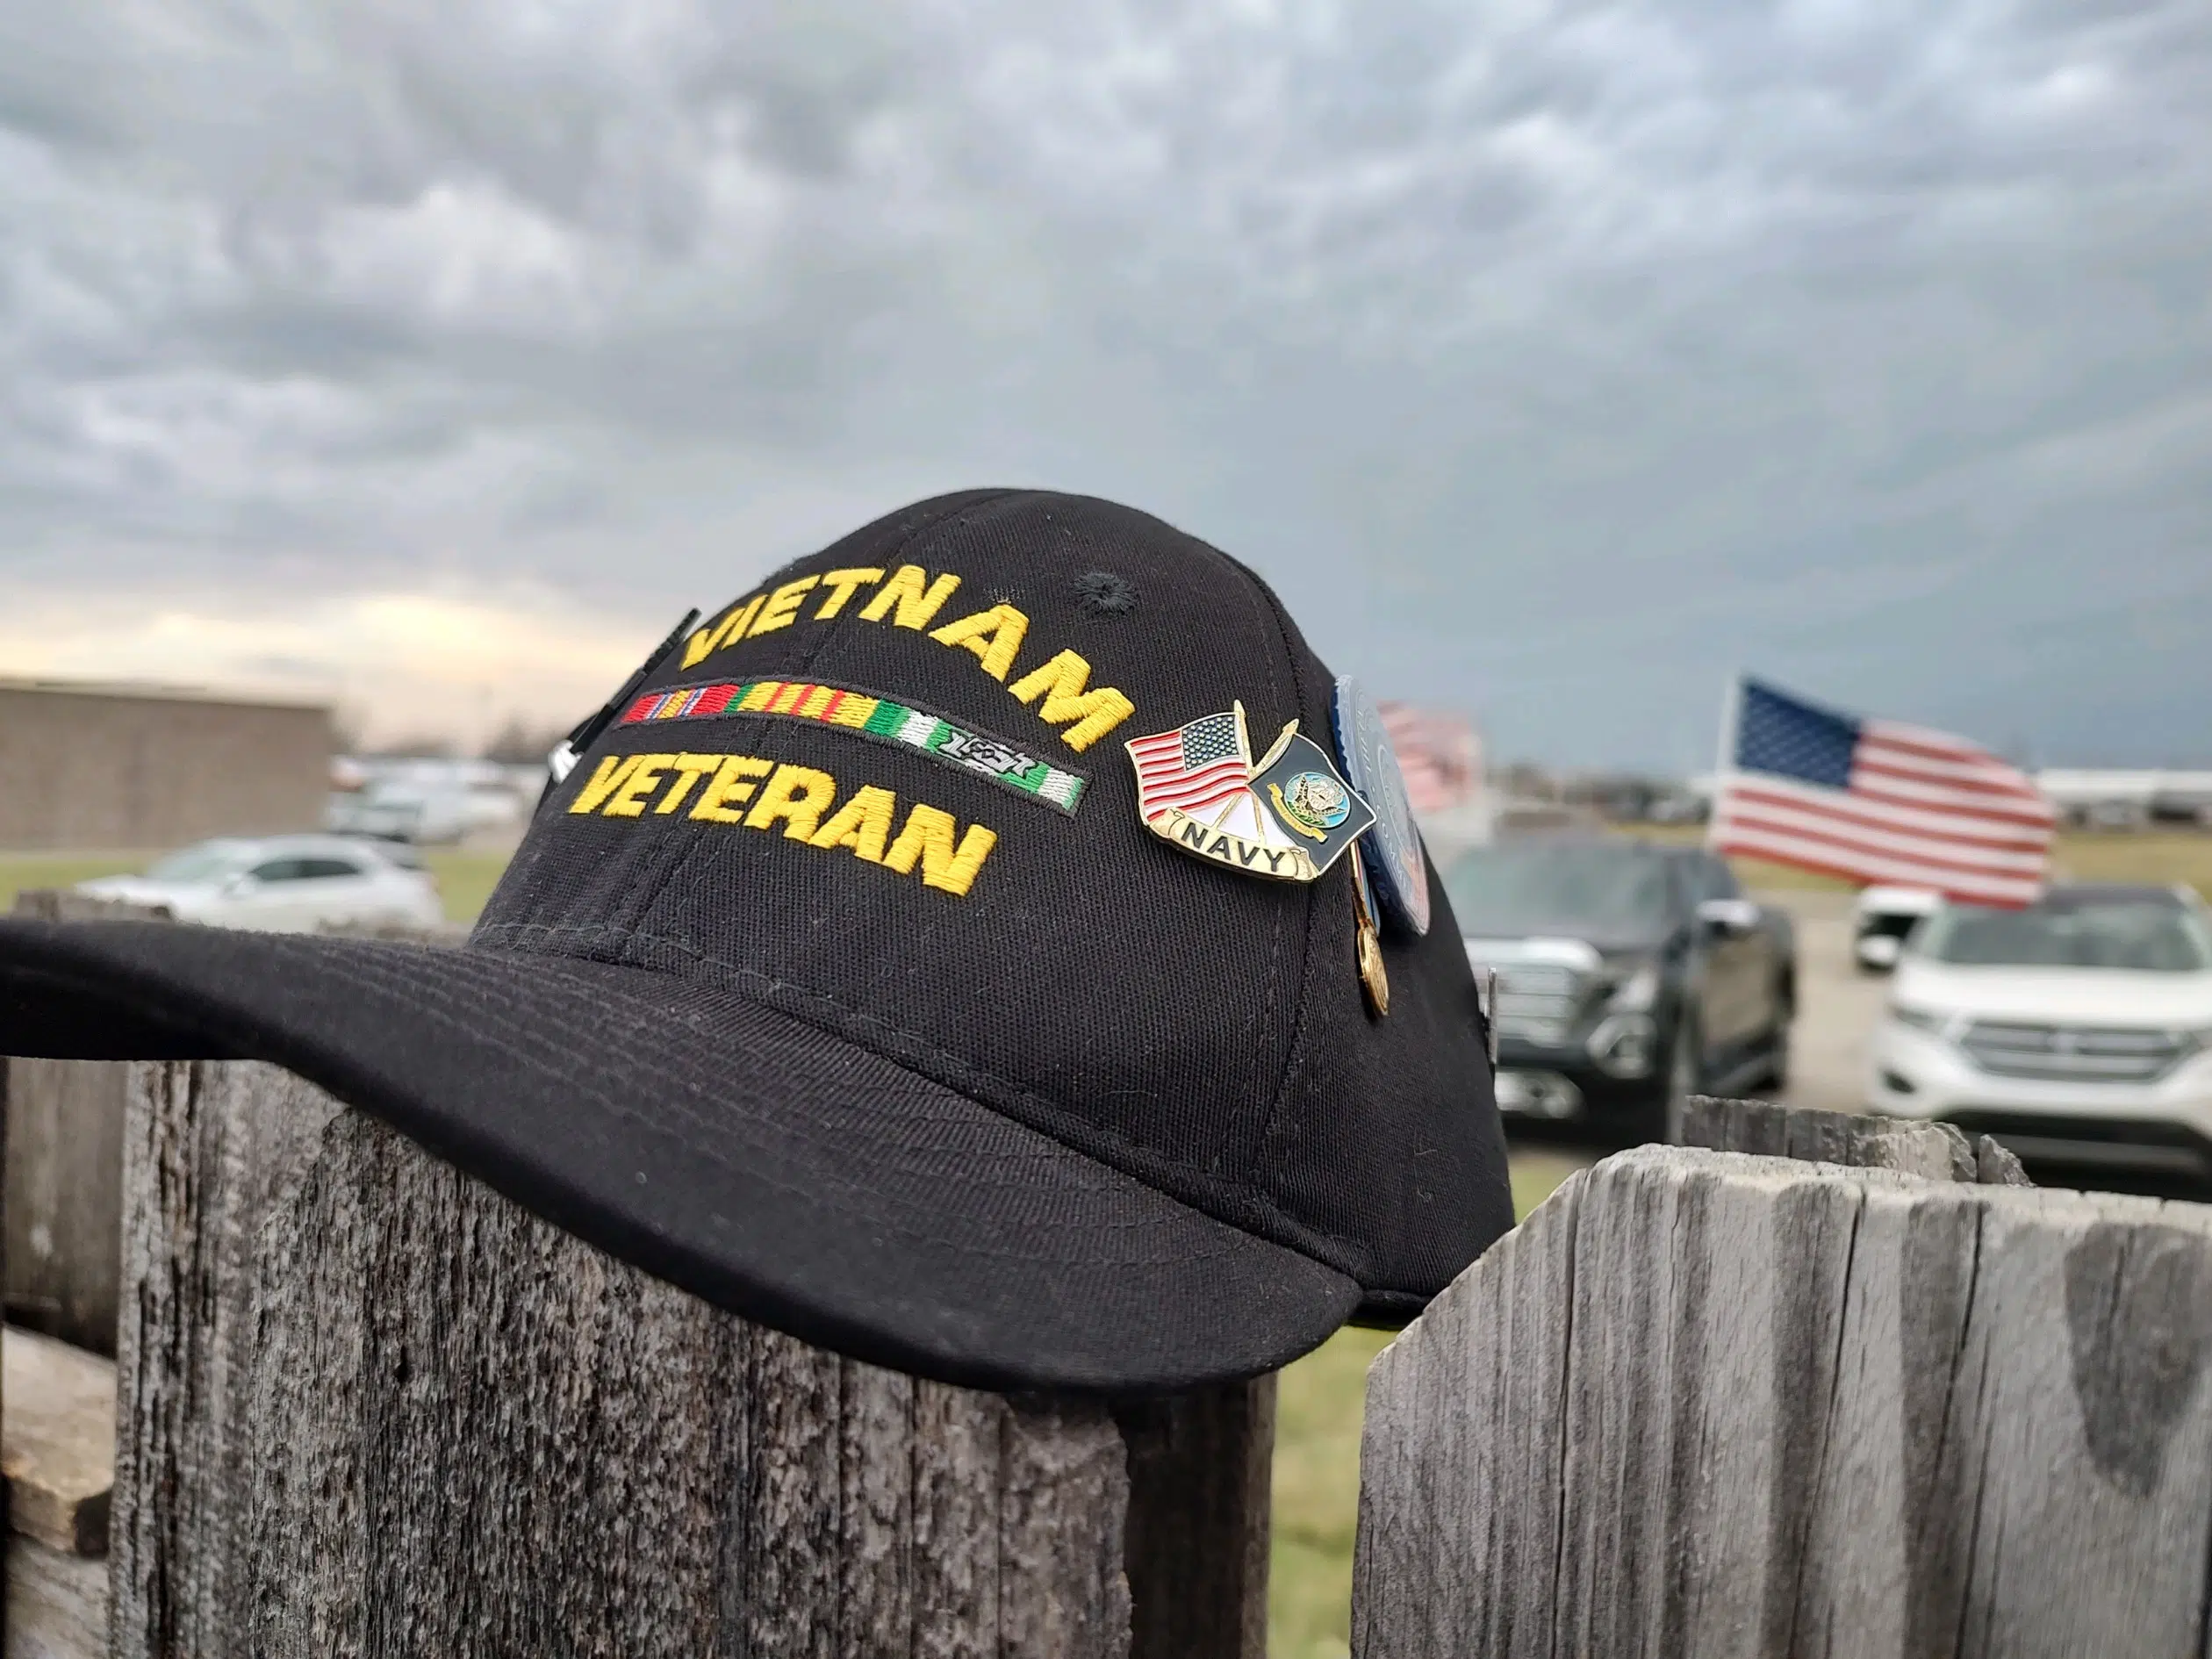 Local Vietnam veterans receive Home” on Vietnam War Veterans